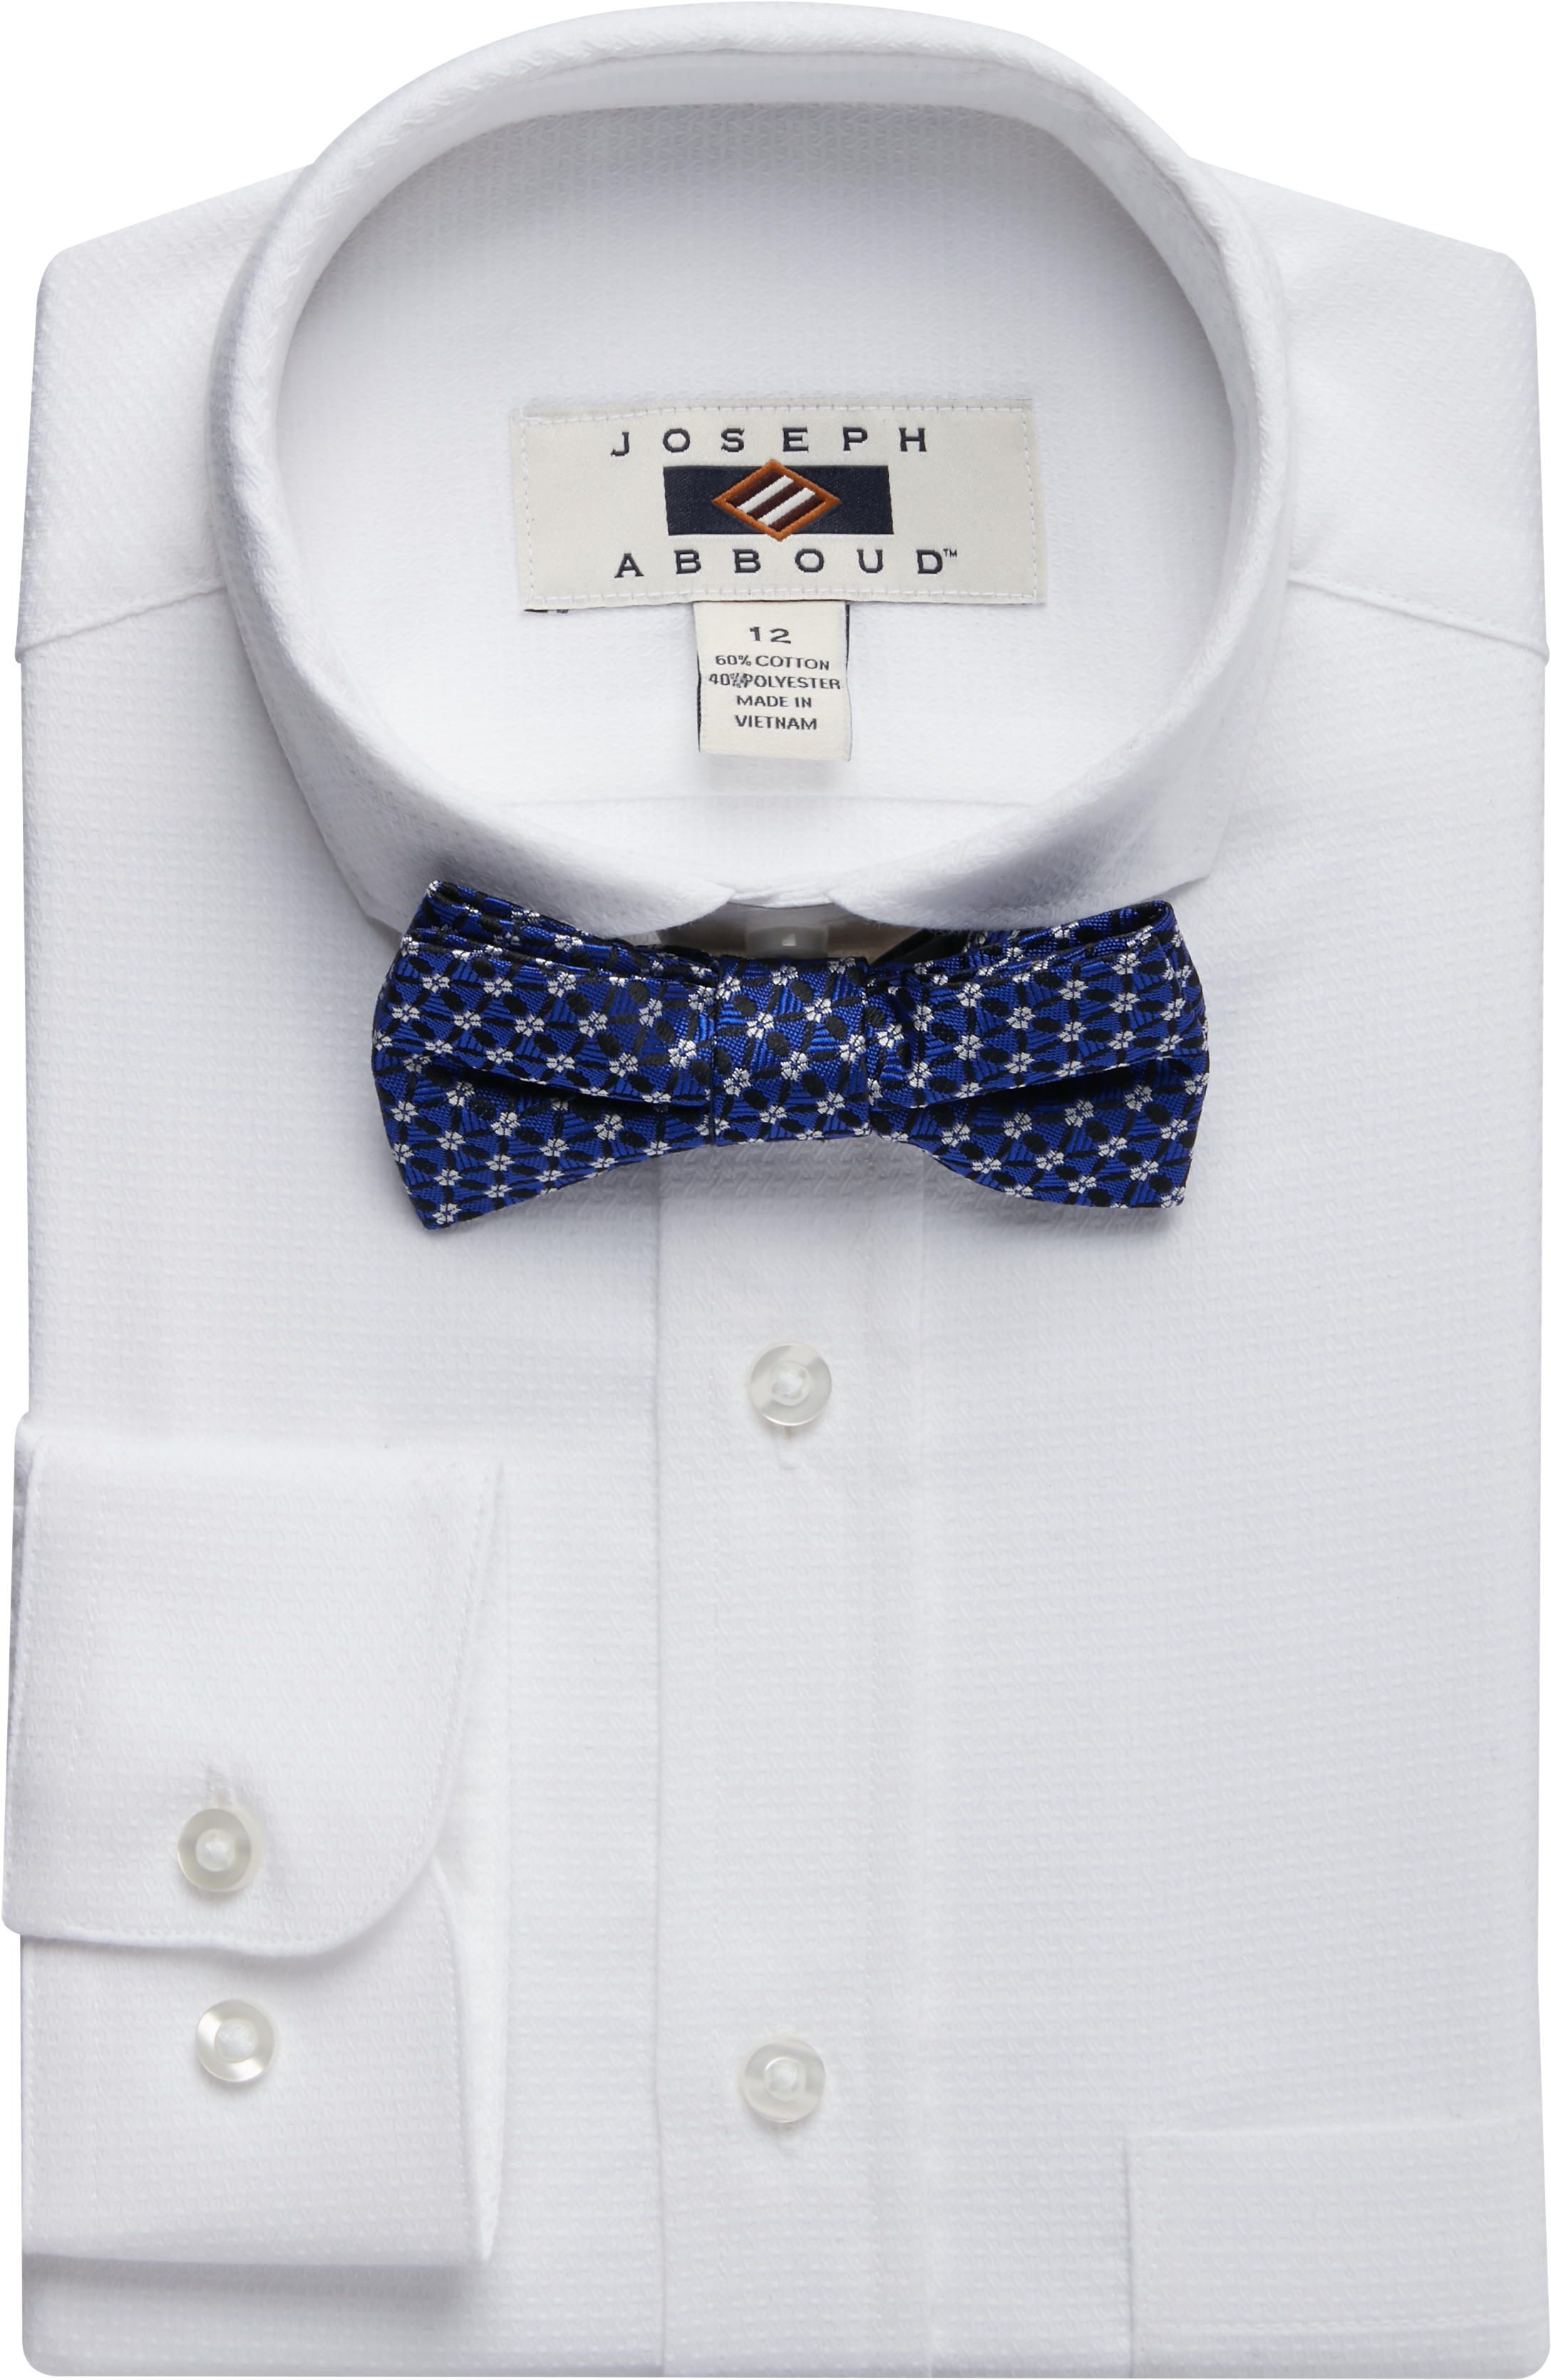 Joseph Abboud Boys White Dress Shirt & Bow Tie Set - Men's Clothing ...